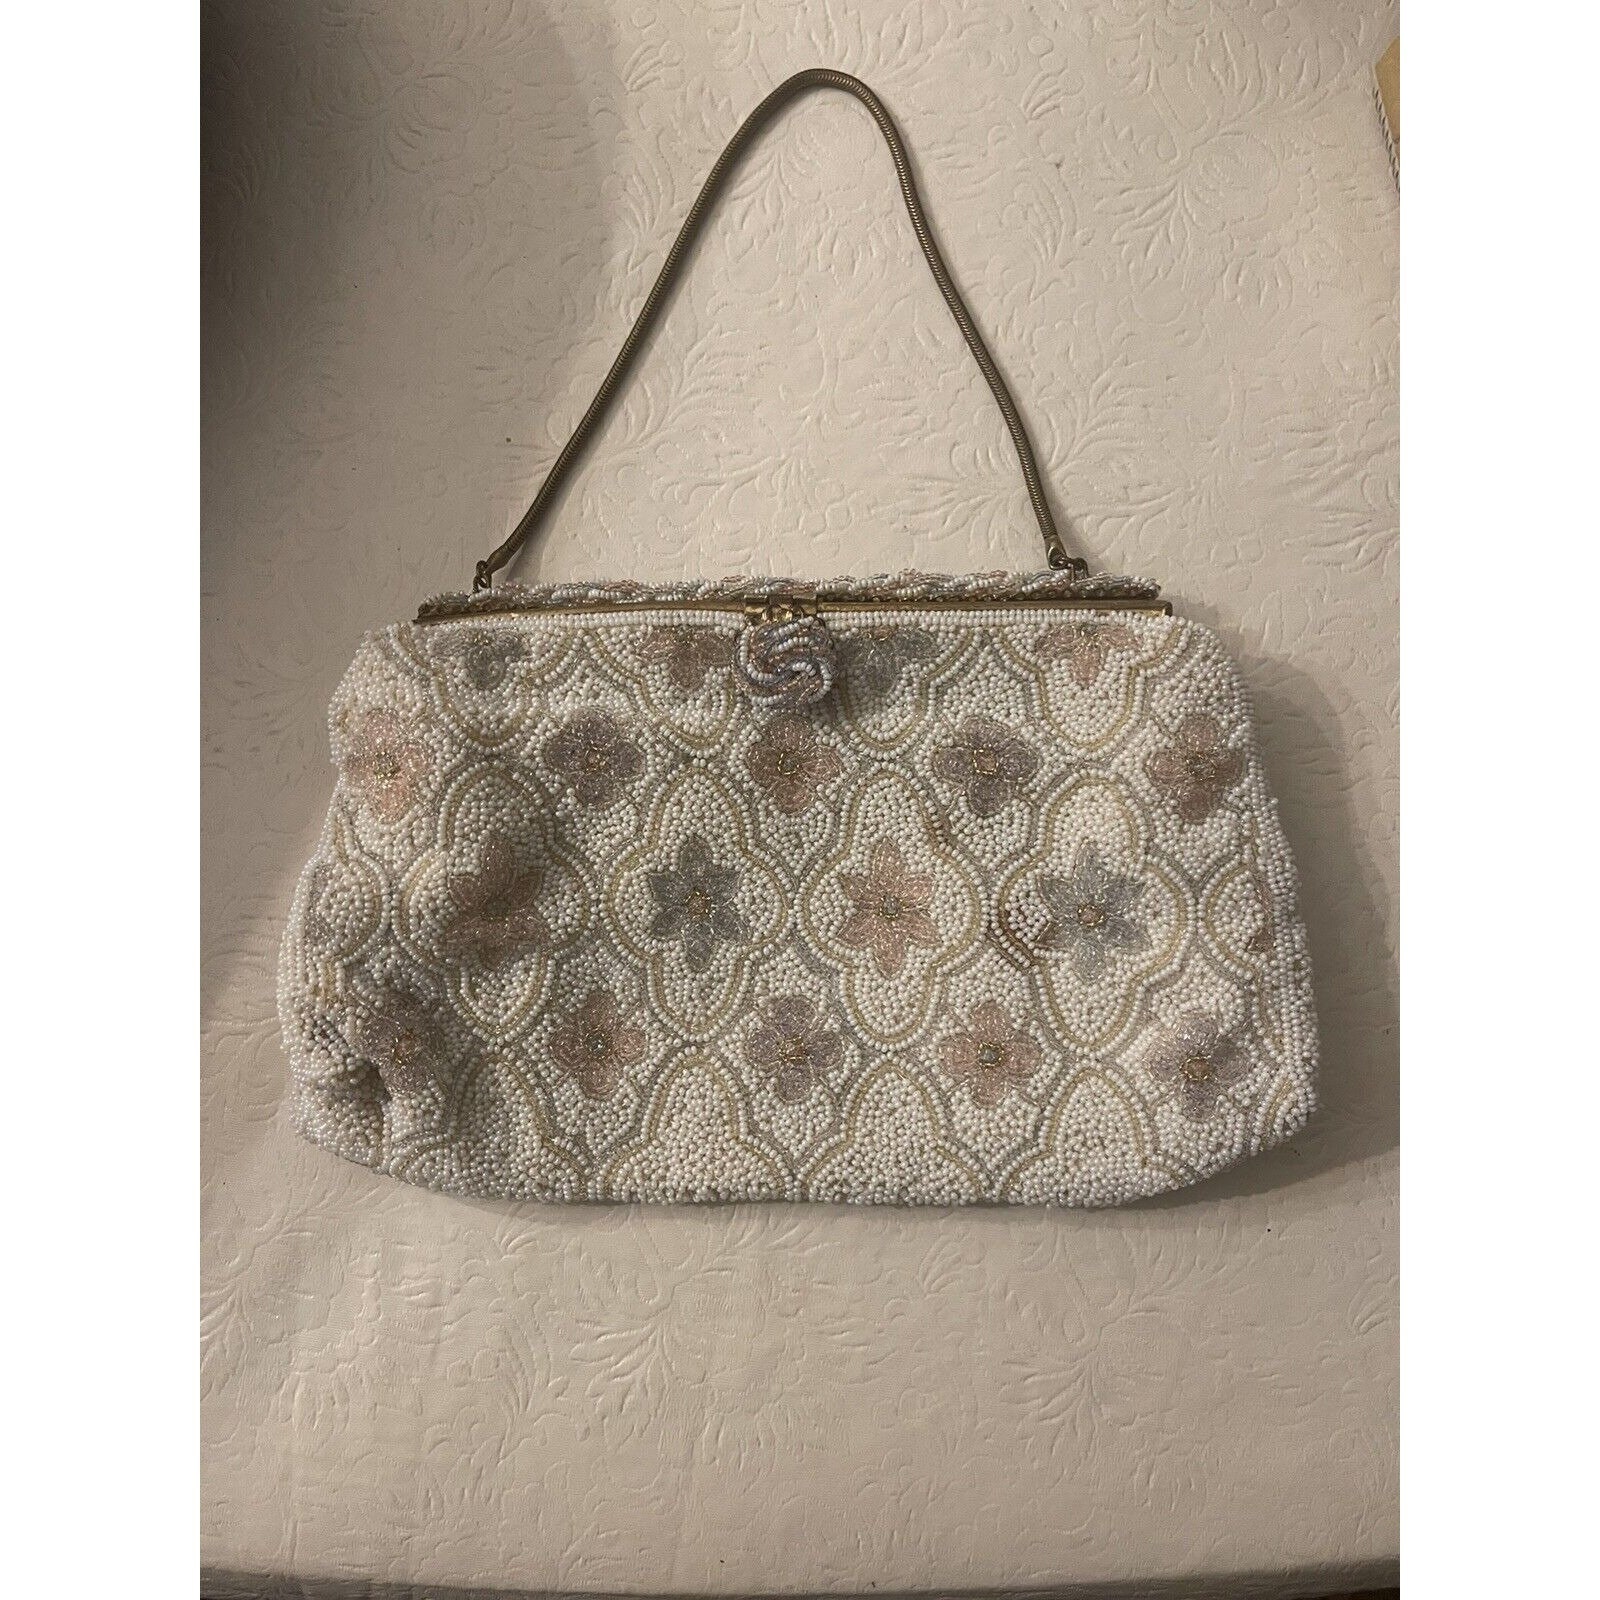 Vintage Handbag Female Luxury Evening Bags Party Purses and Handbags Womens  Clutch Crossbody Bags (C…See more Vintage Handbag Female Luxury Evening